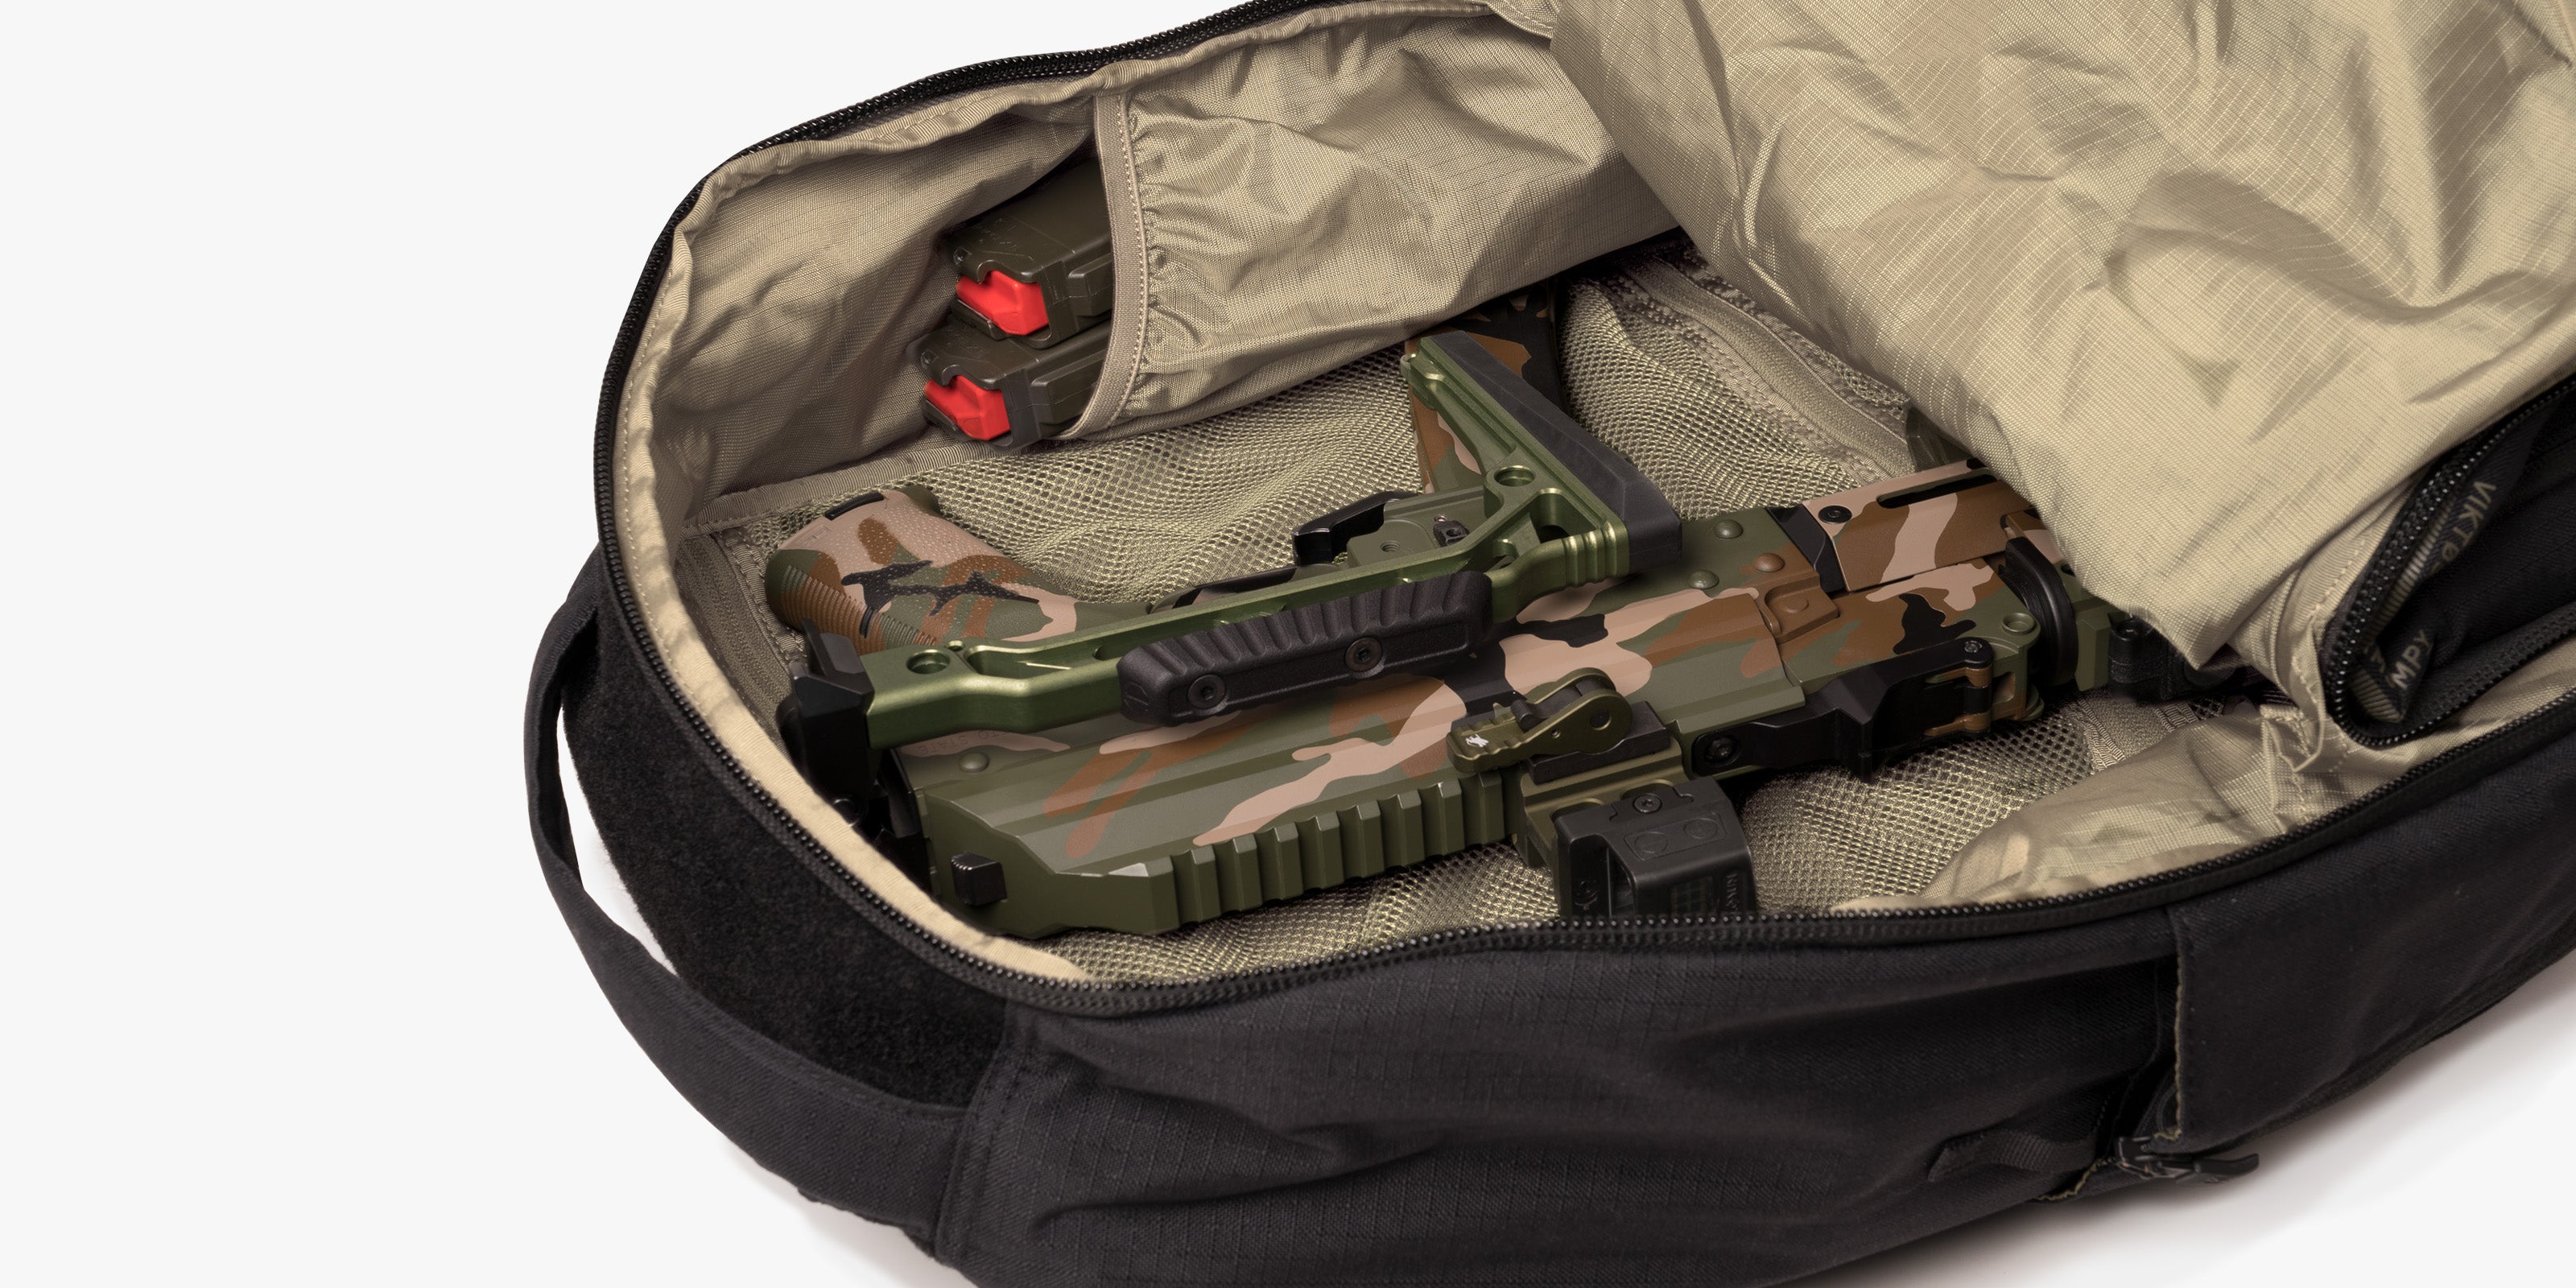 Viktos Perimeter Backpack 40L, Multicam Black